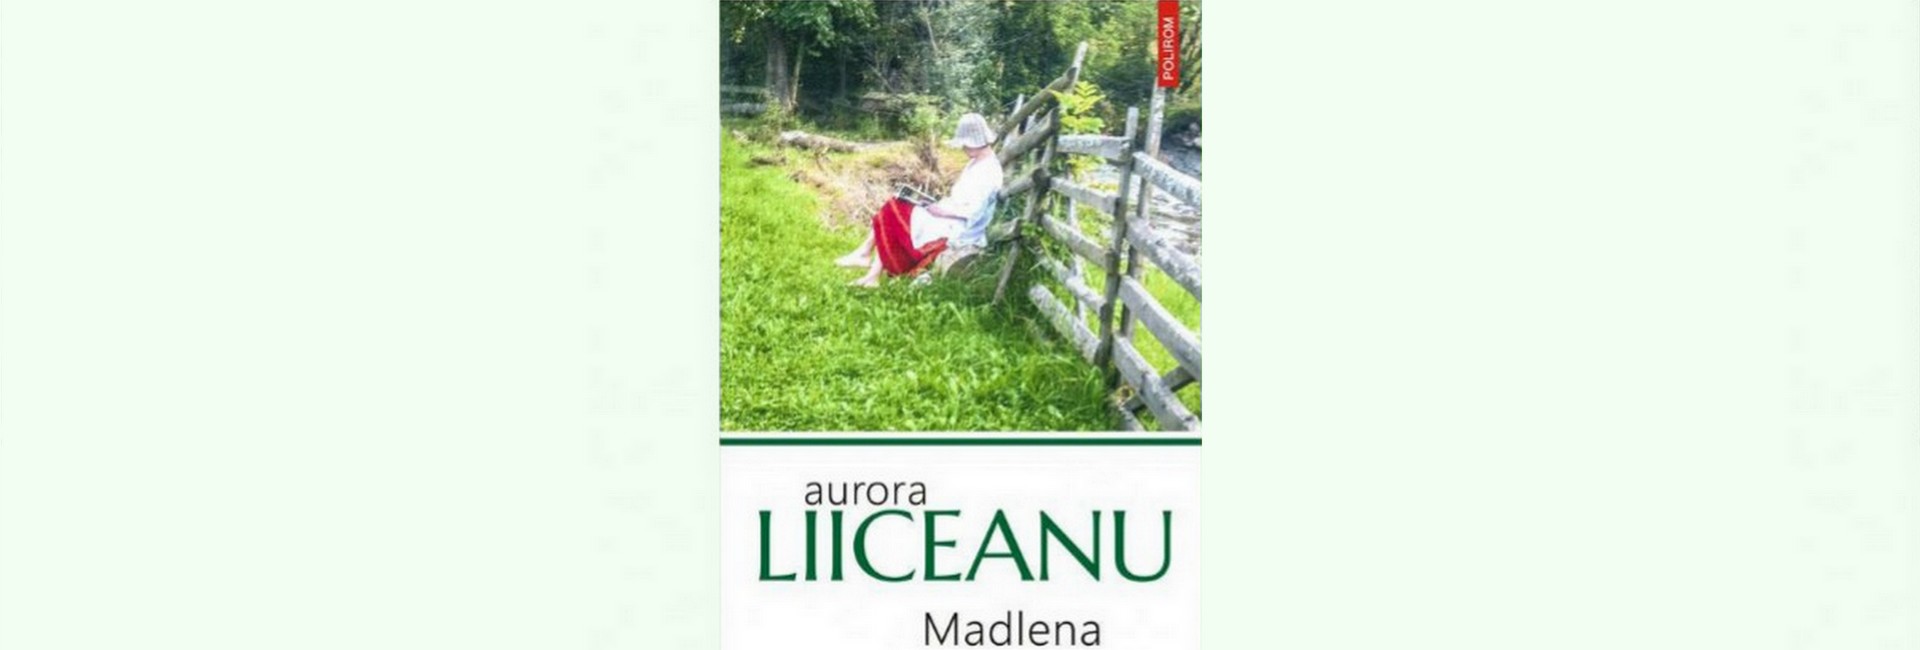 recenzie roman Aurora Liiceanu Madlena